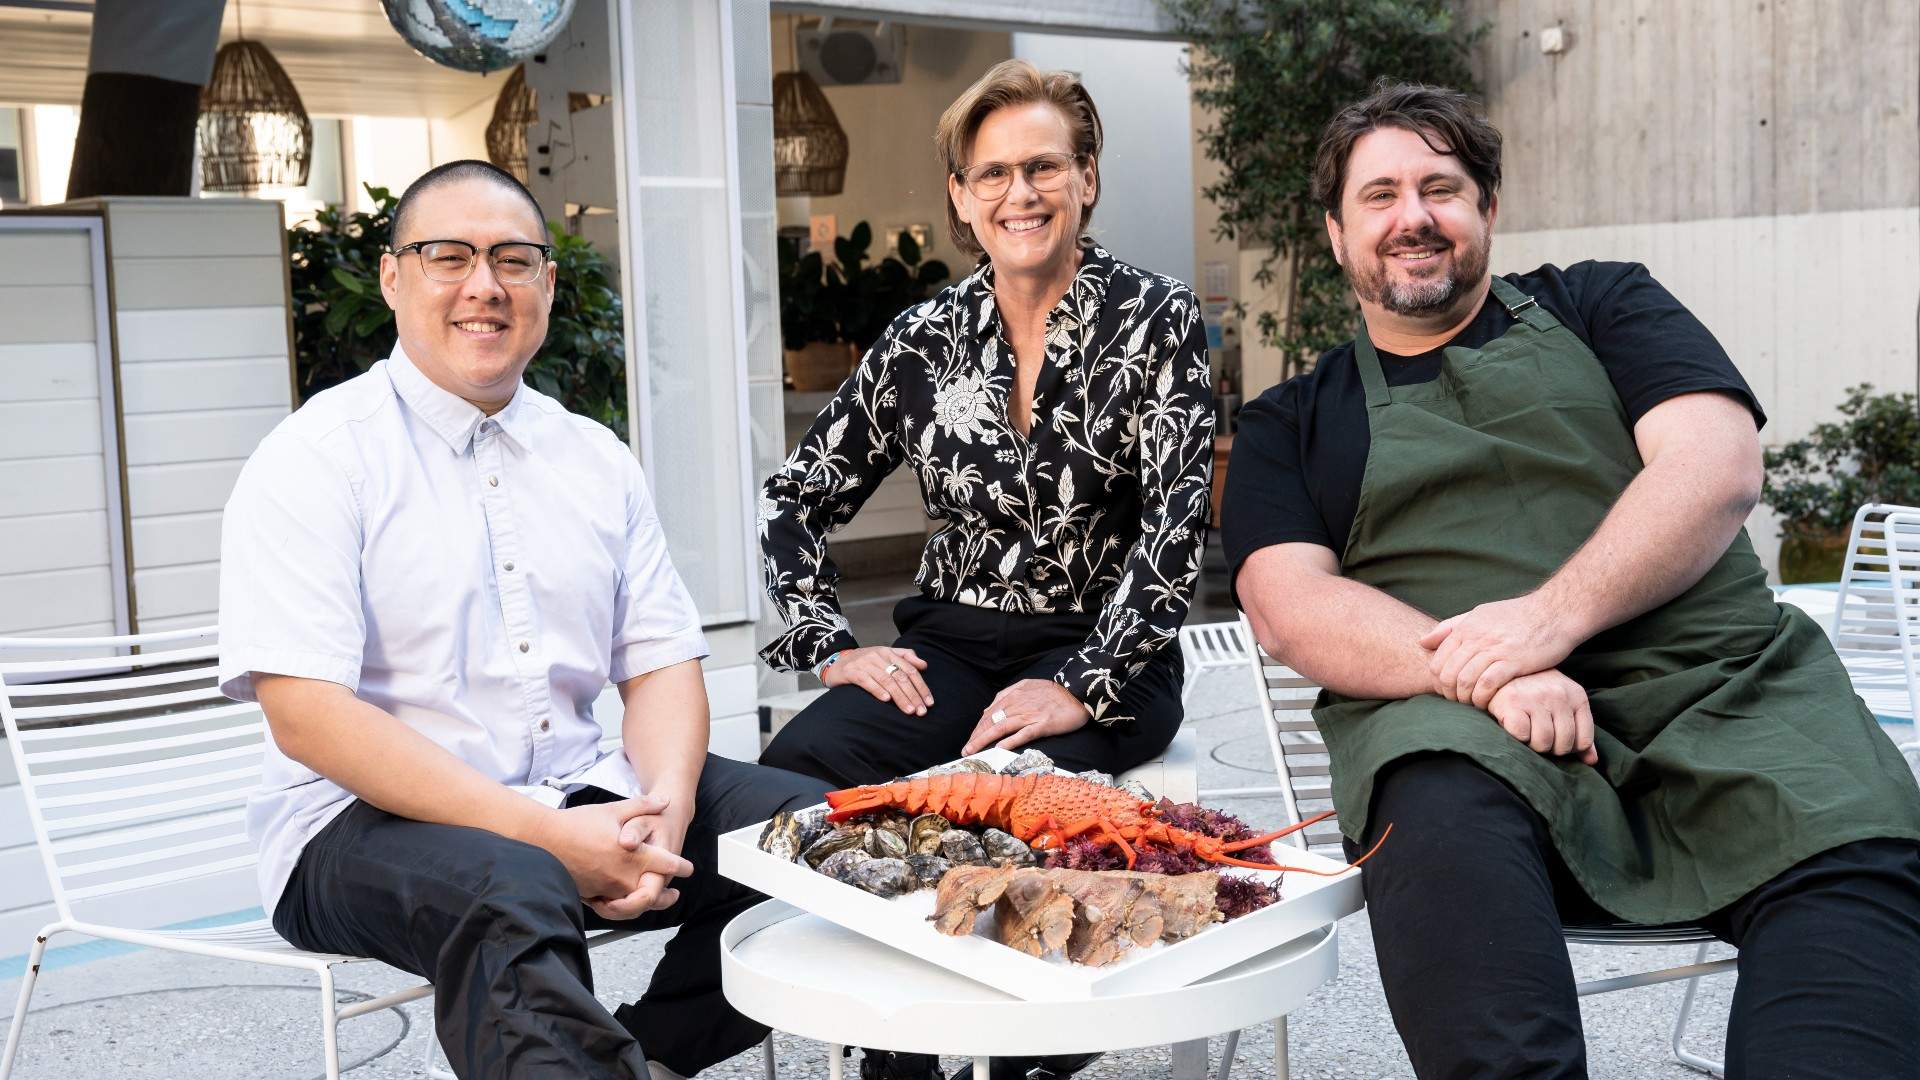 Dan Hong and Mike Eggert's Vivid Sydney Dinner Will Be "Like Nothing You've Seen Before"